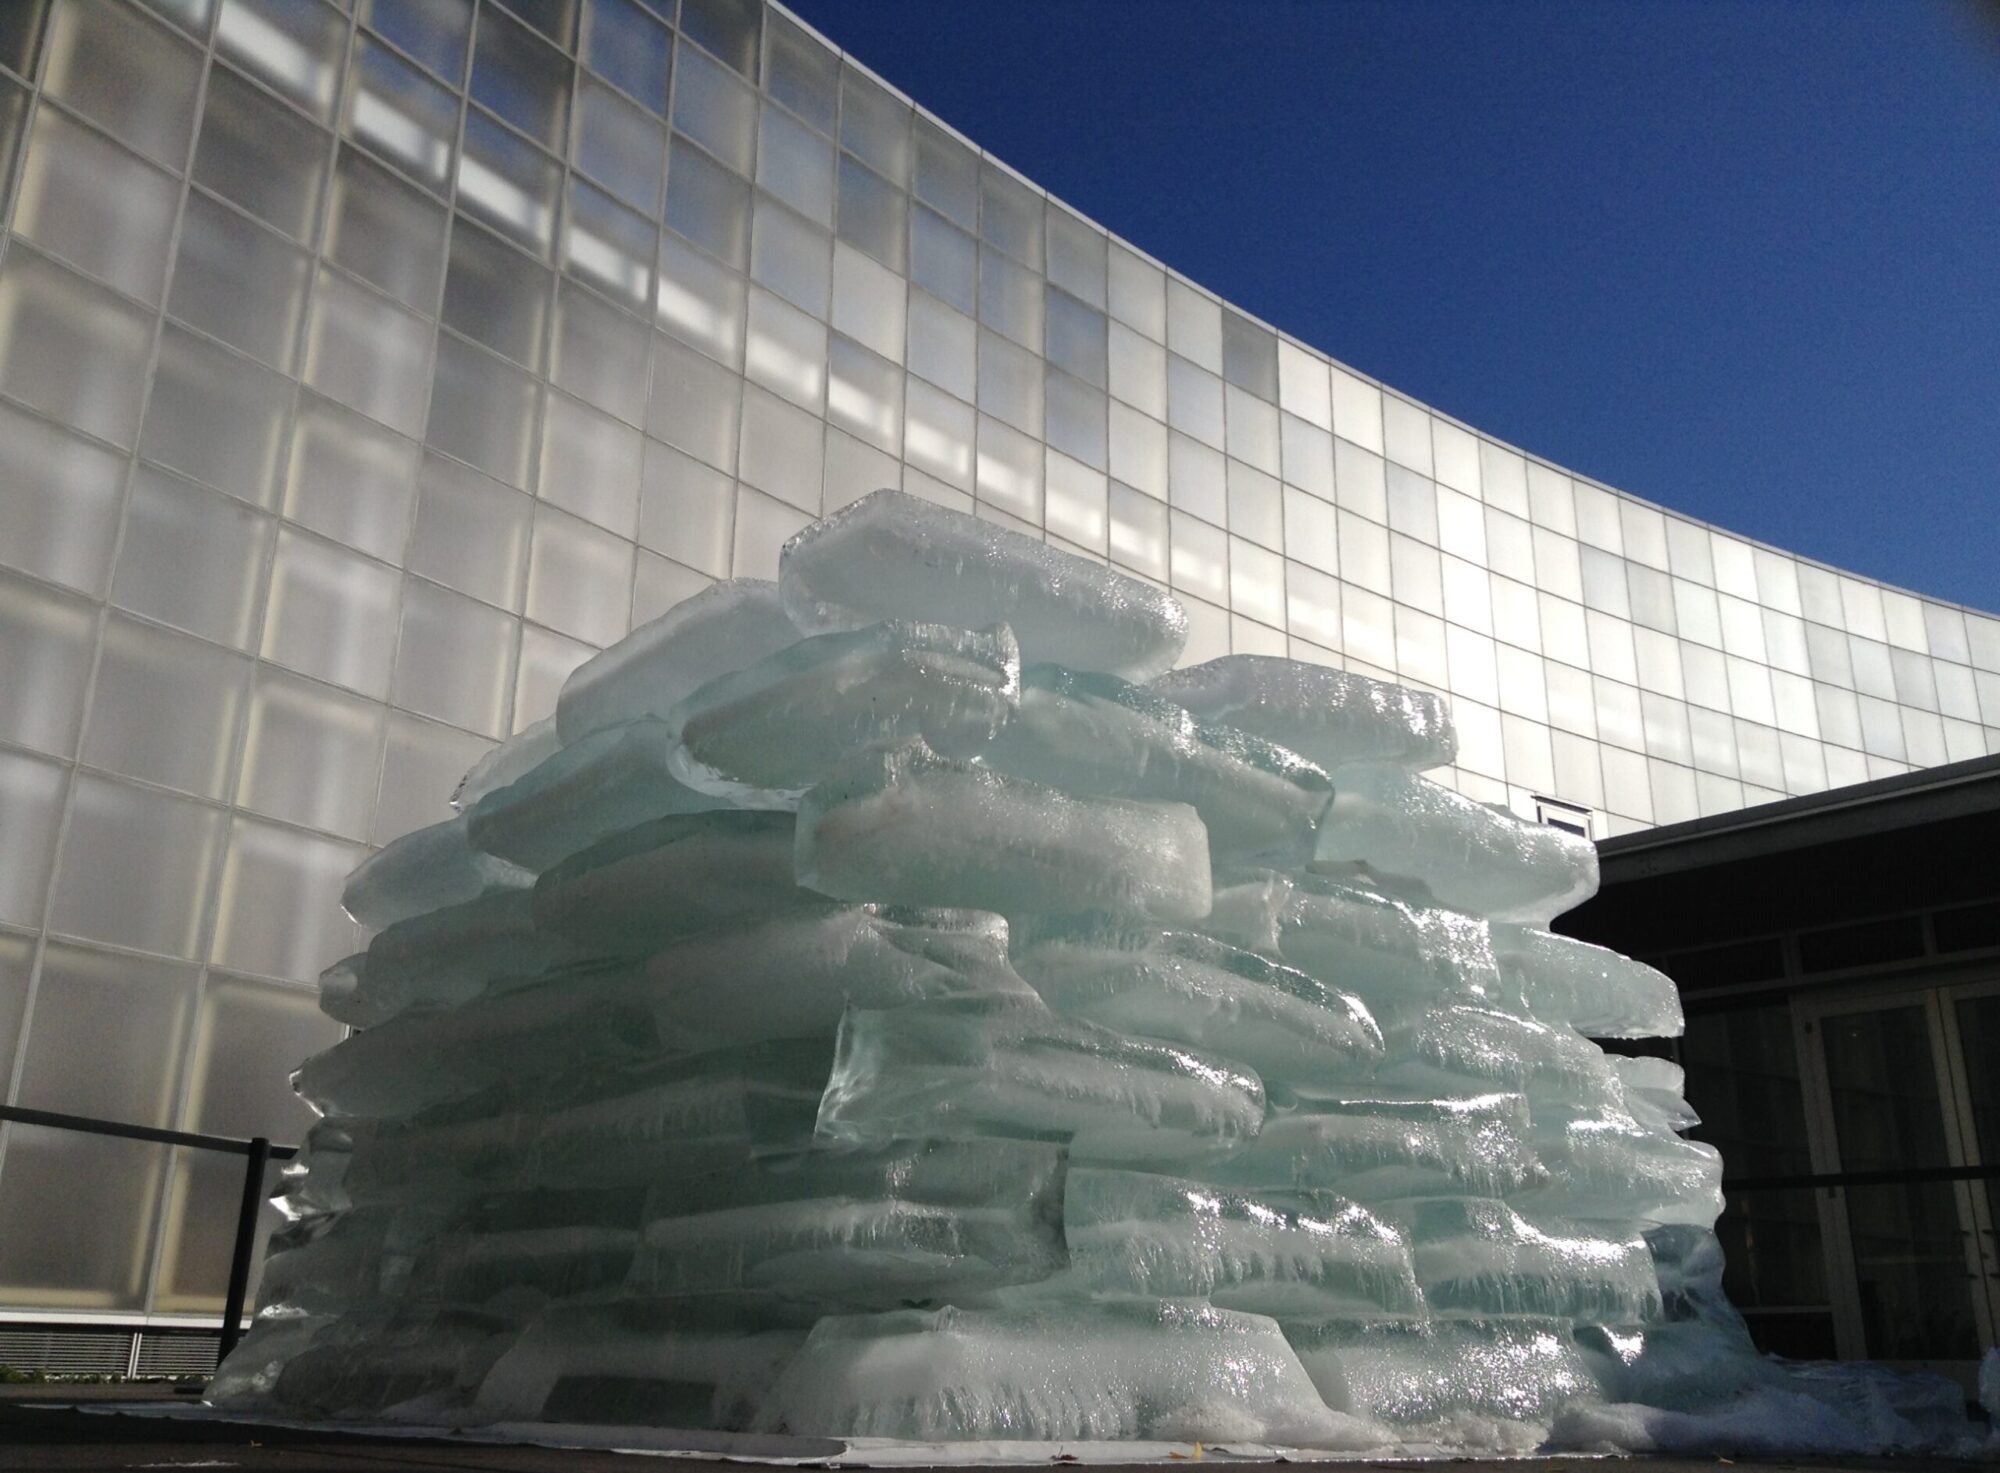 Melting Ice Installation 2013